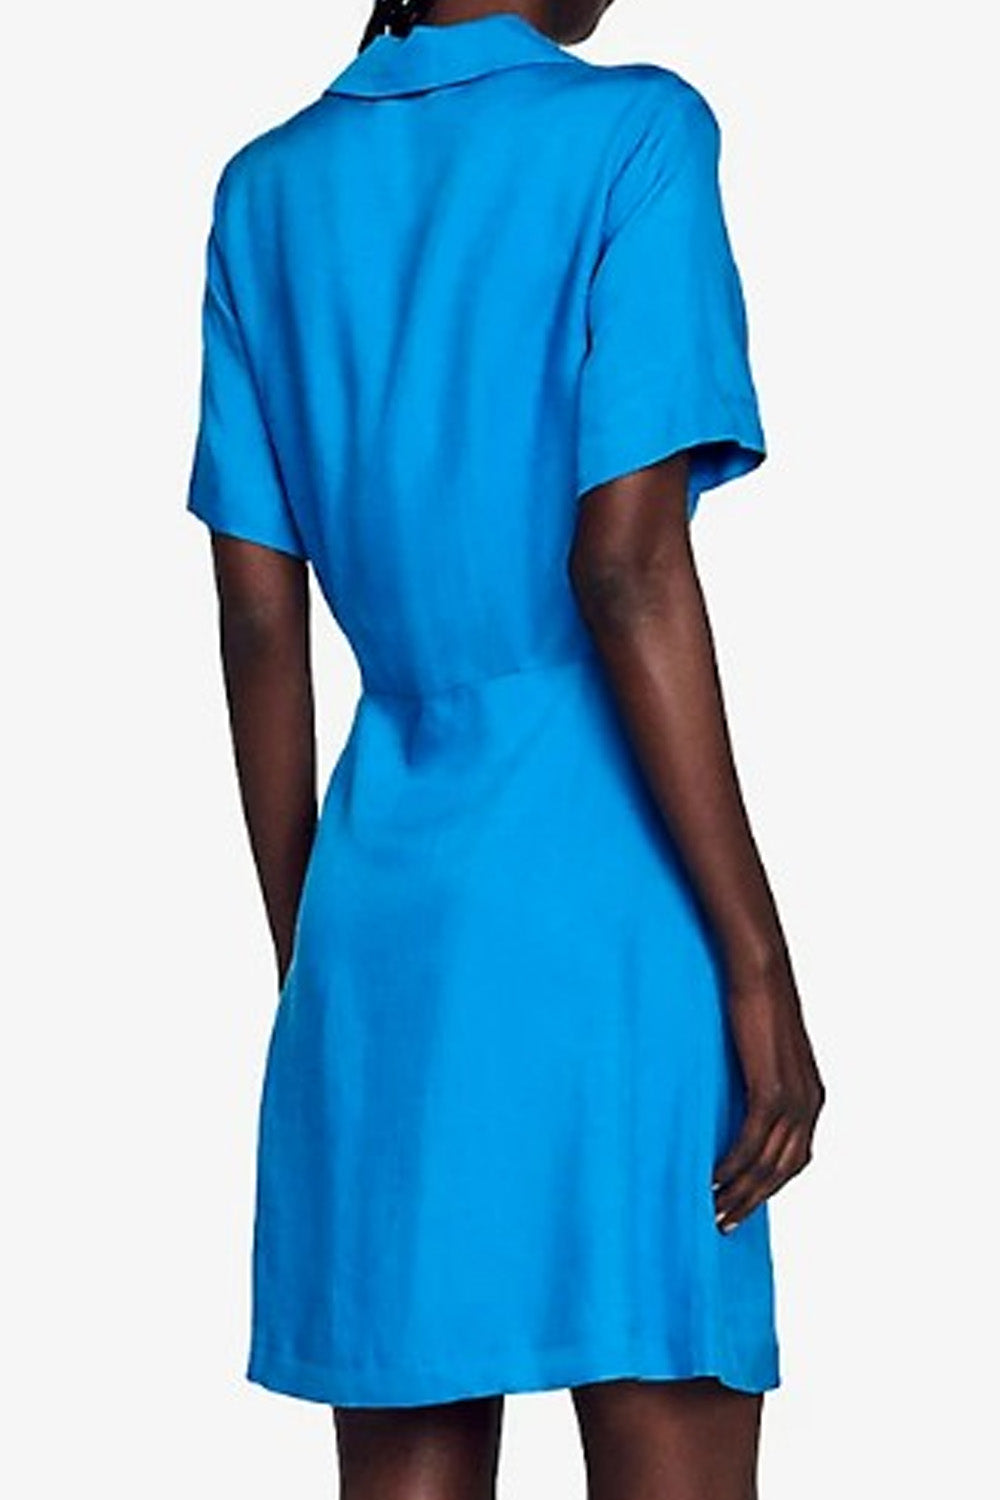 Ephemeral  Blue Dress